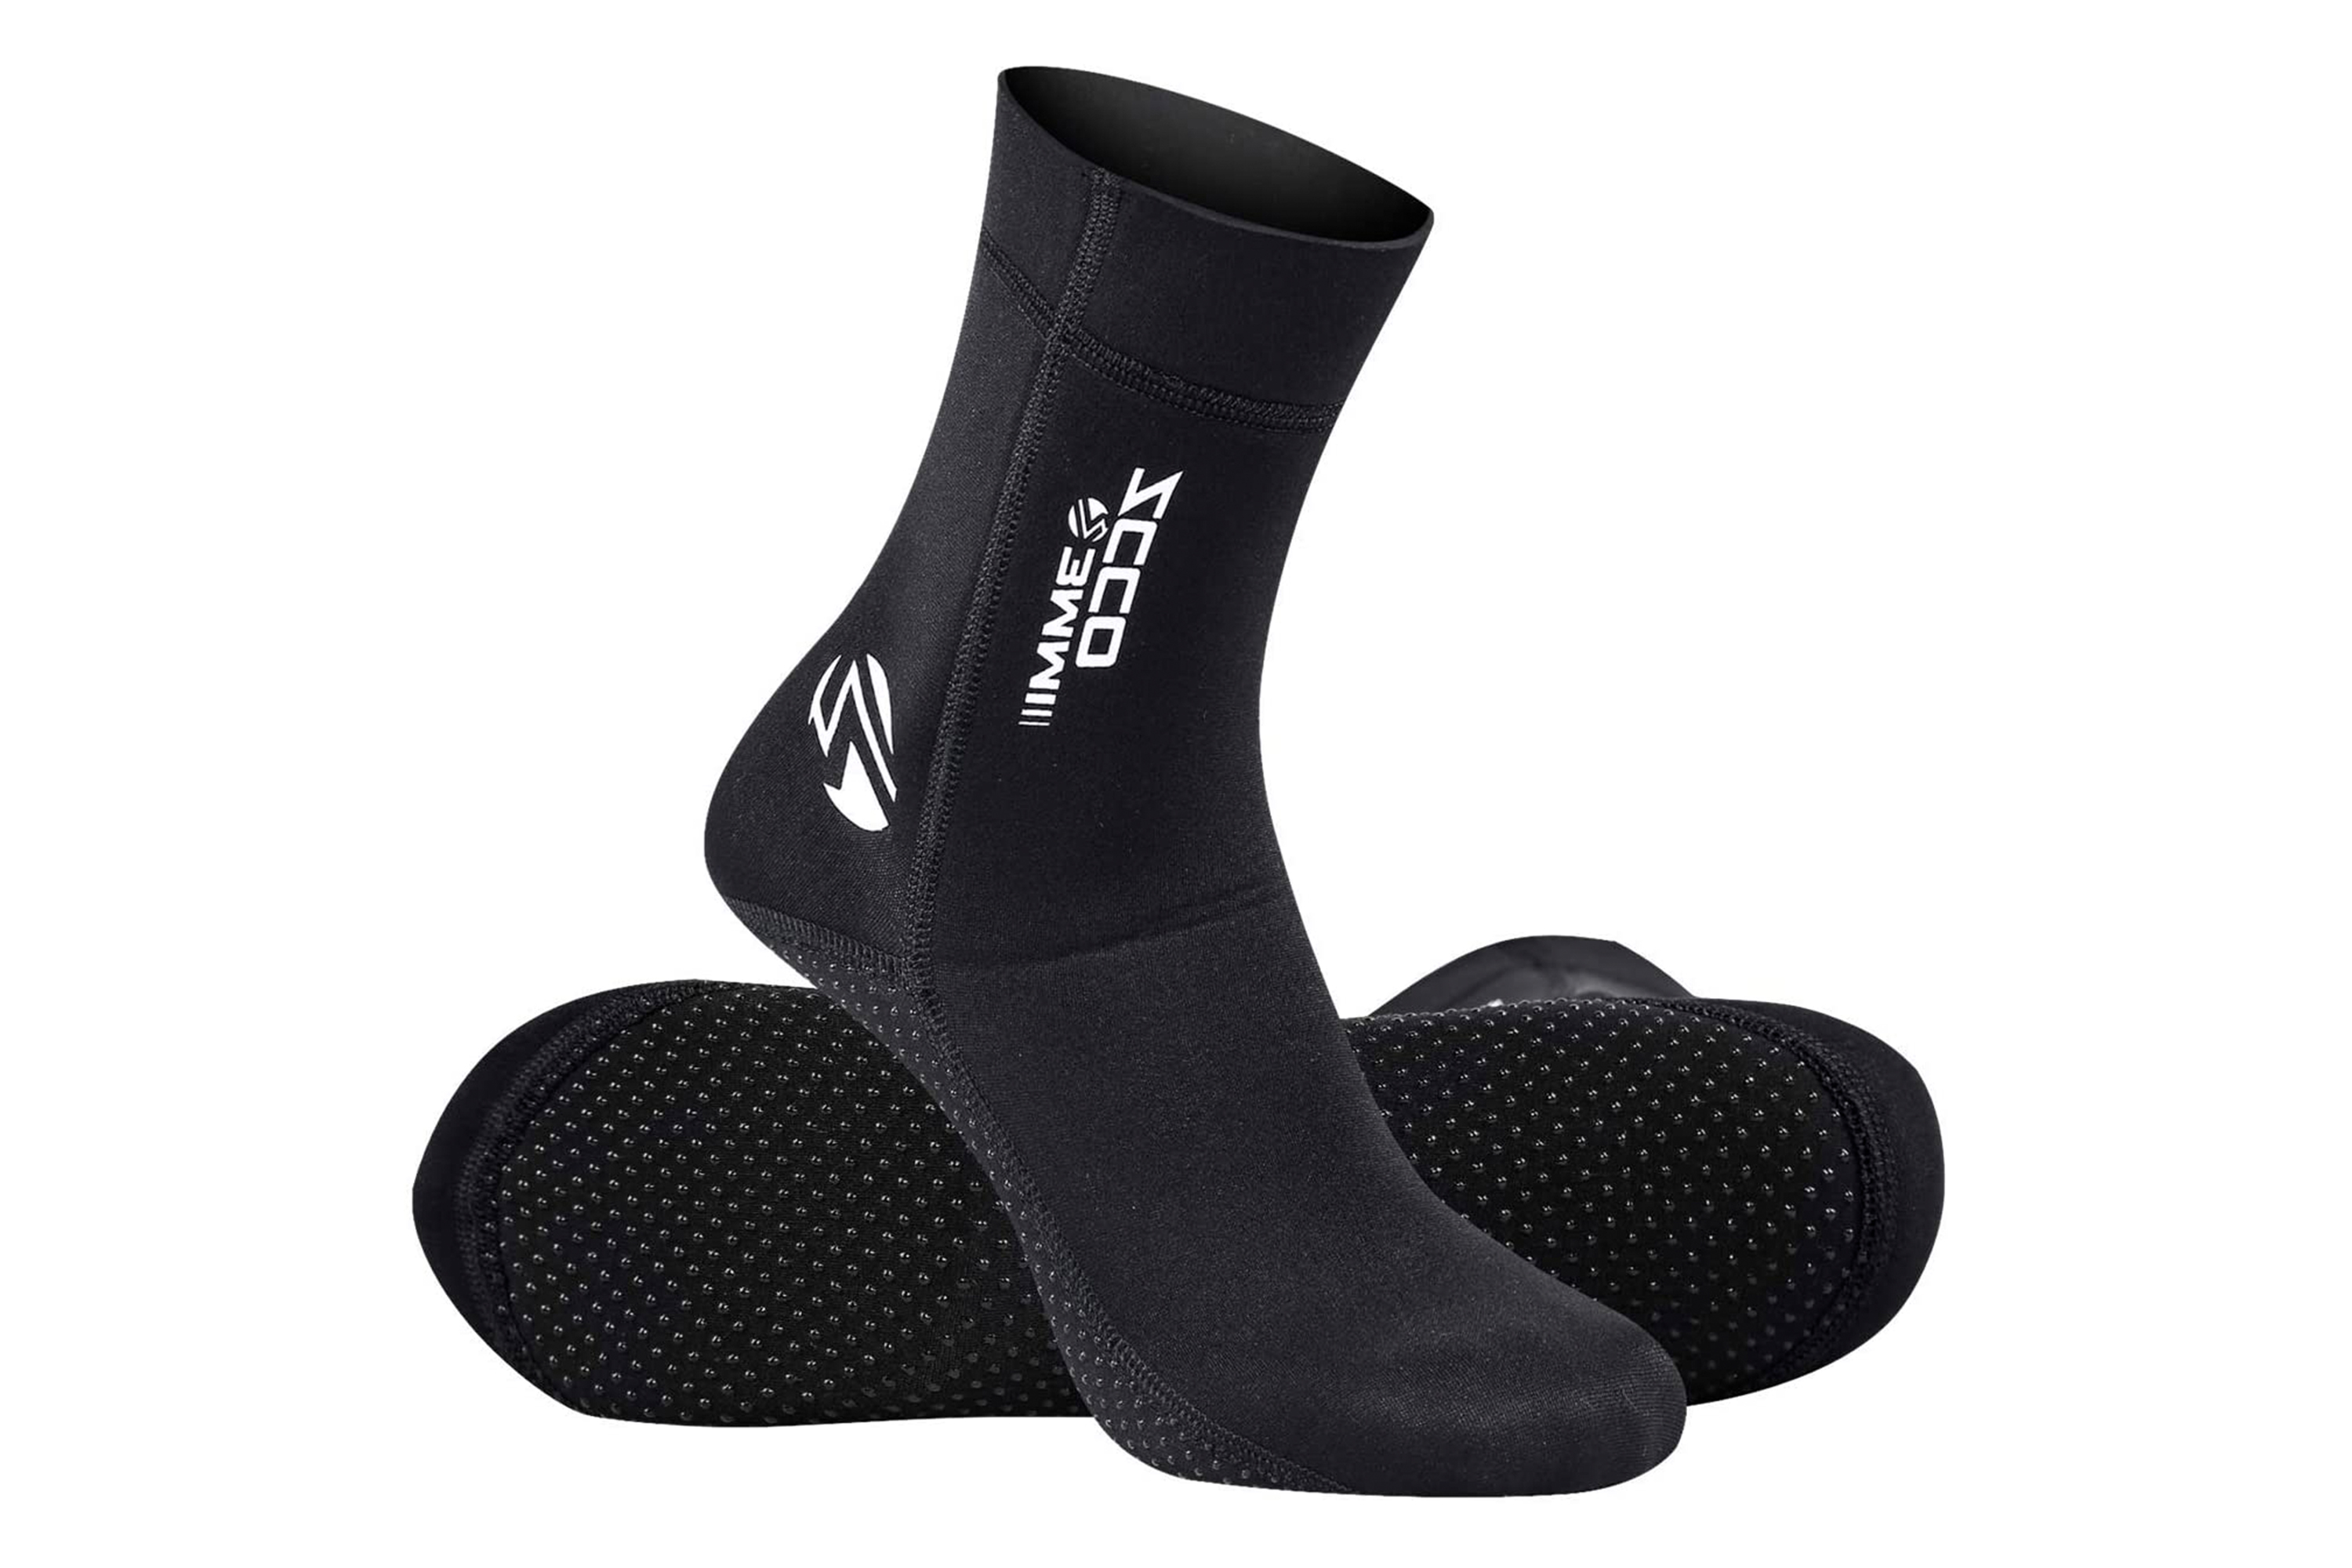 Best swimming socks for braving cold water - 220 Triathlon